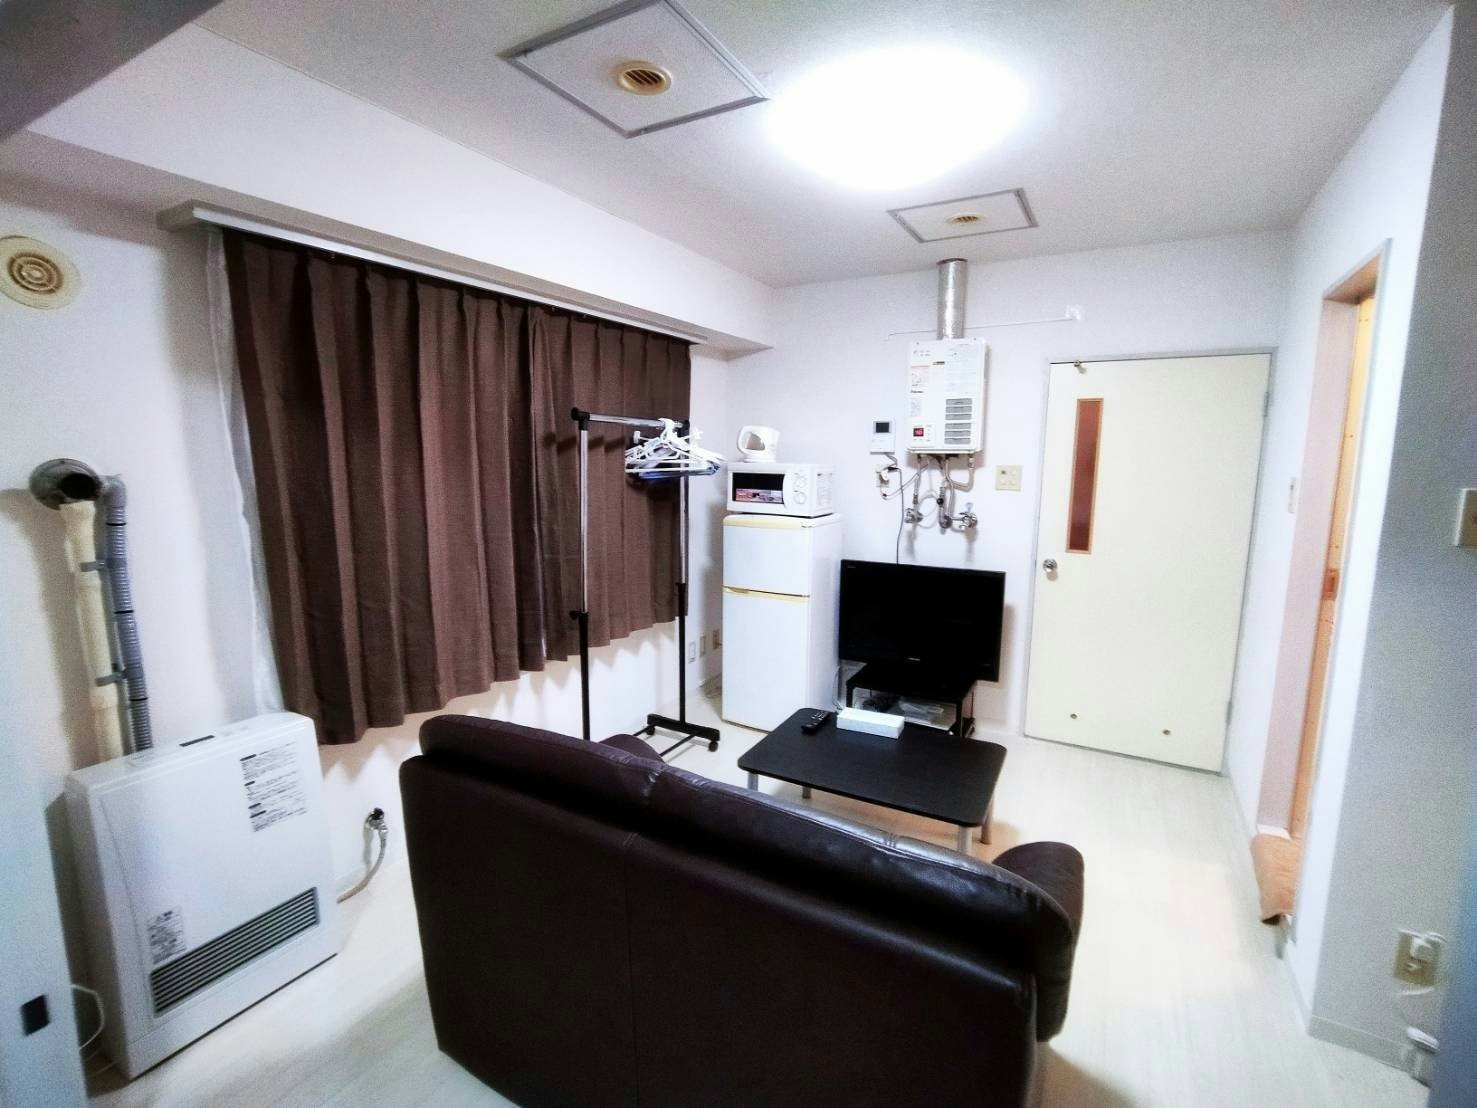 【JR札幌駅徒歩10分】502号室、1DK、洗濯機、無料Wi-Fi【観光の拠点に!短期滞在向き】